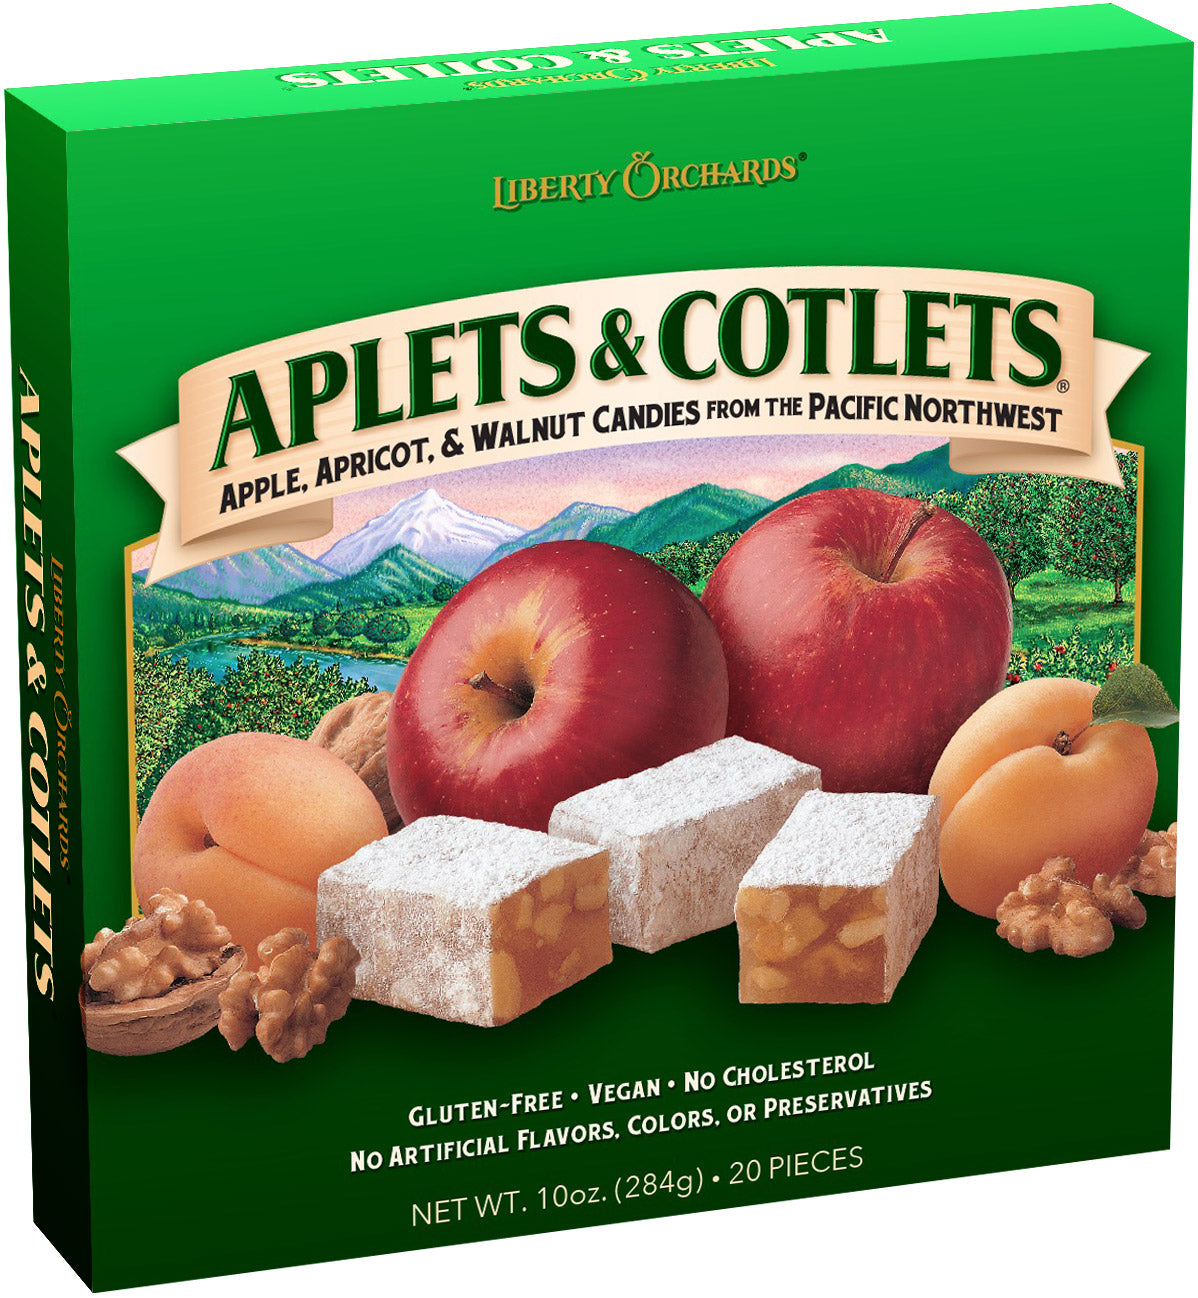 Aplets and Cotlets Original